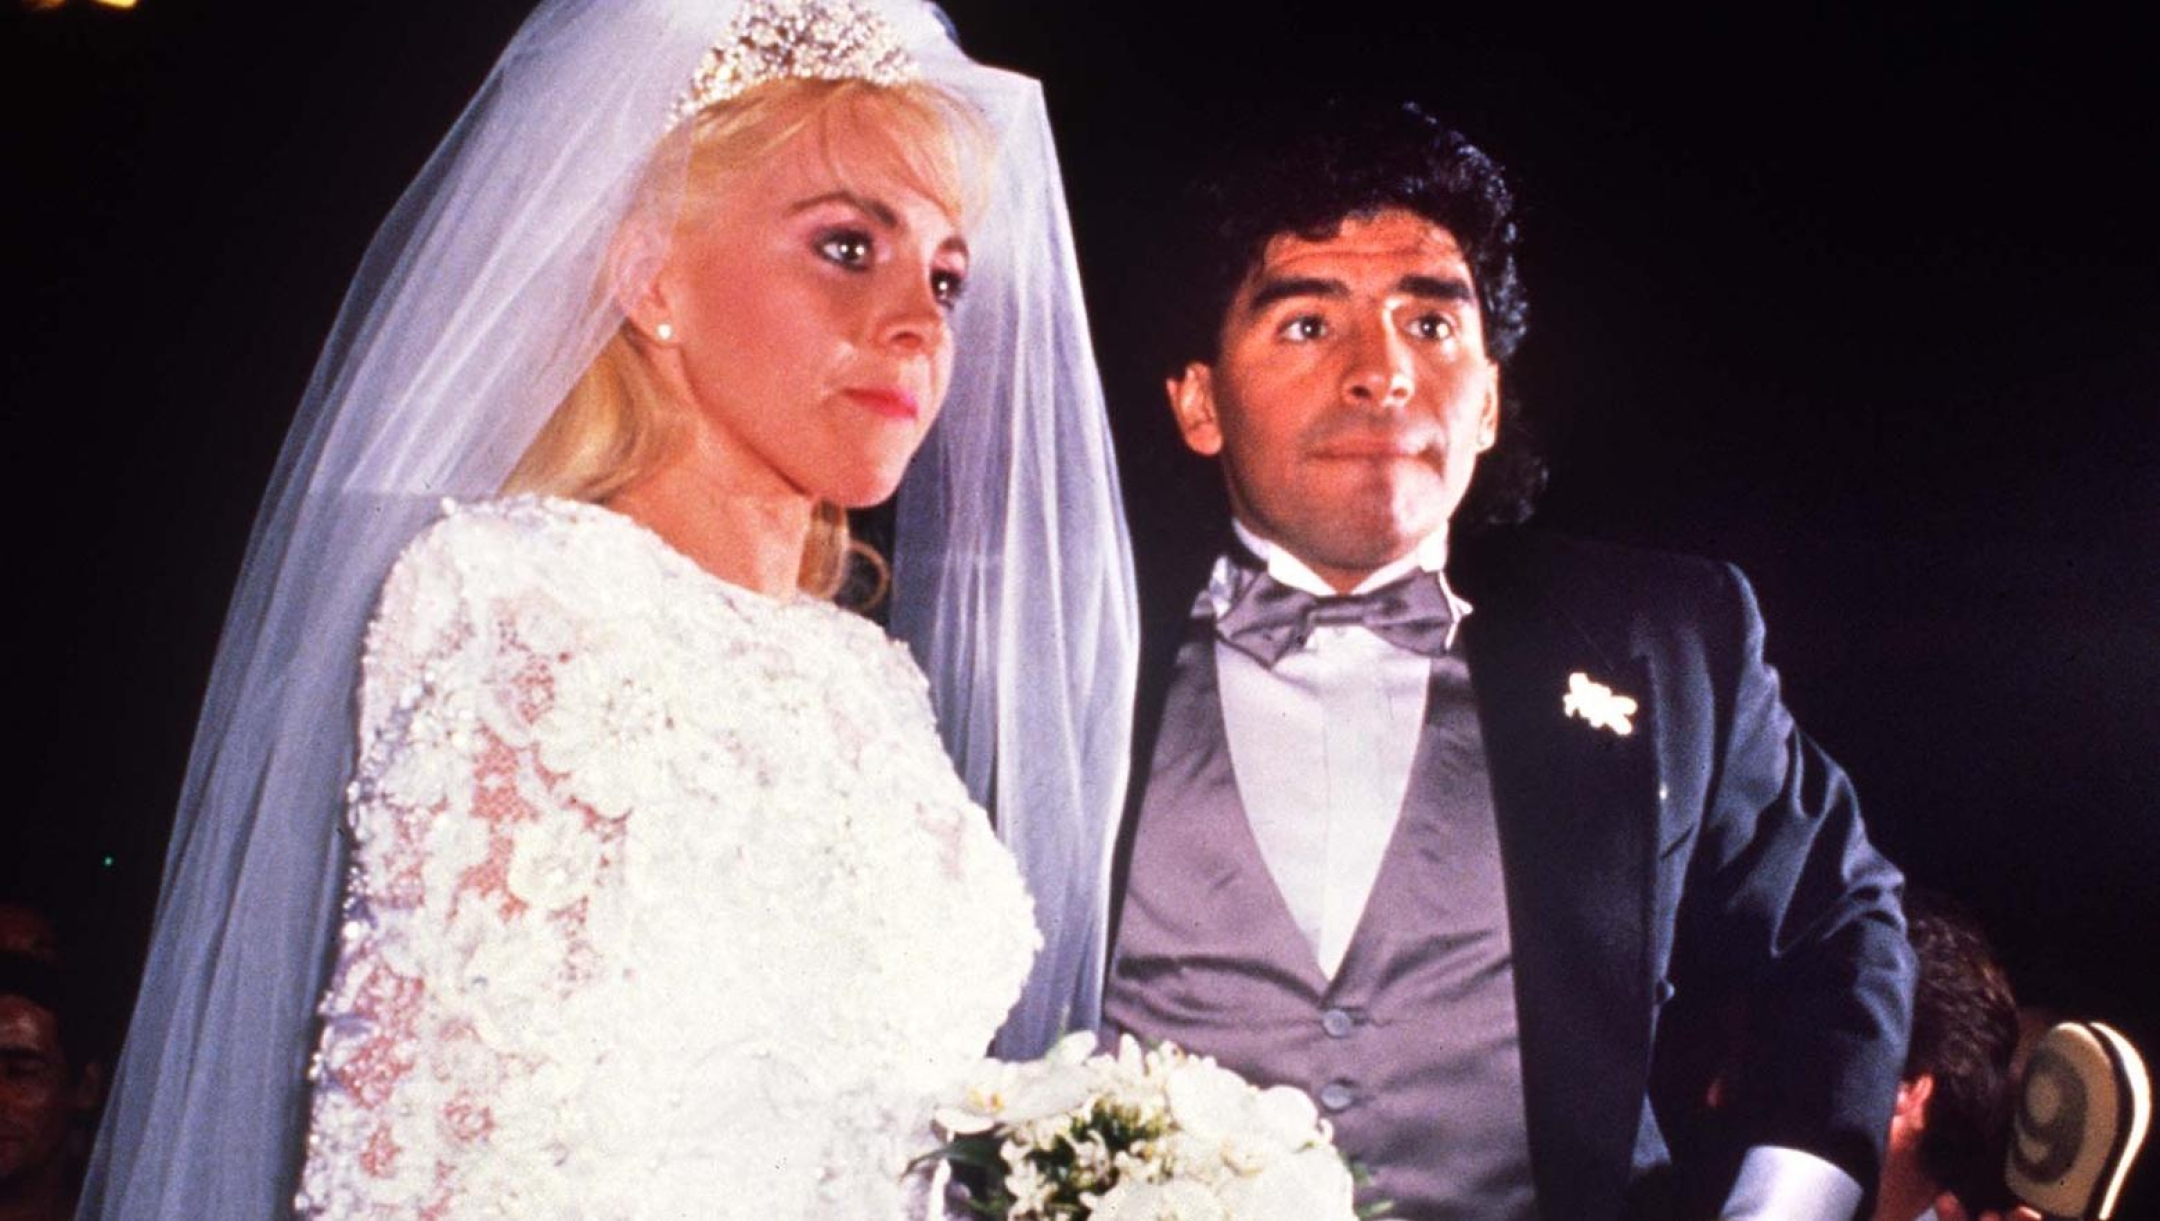 Foto IPP/Colorsport/Sipa Buonos Aires 07/11/1989 il matrimonio tra il calciatore Diego Armando Maradona e Claudia Villafane - WARNING AVAILABLE ONLY FOR ITALIAN MARKET - Italy Photo Press -